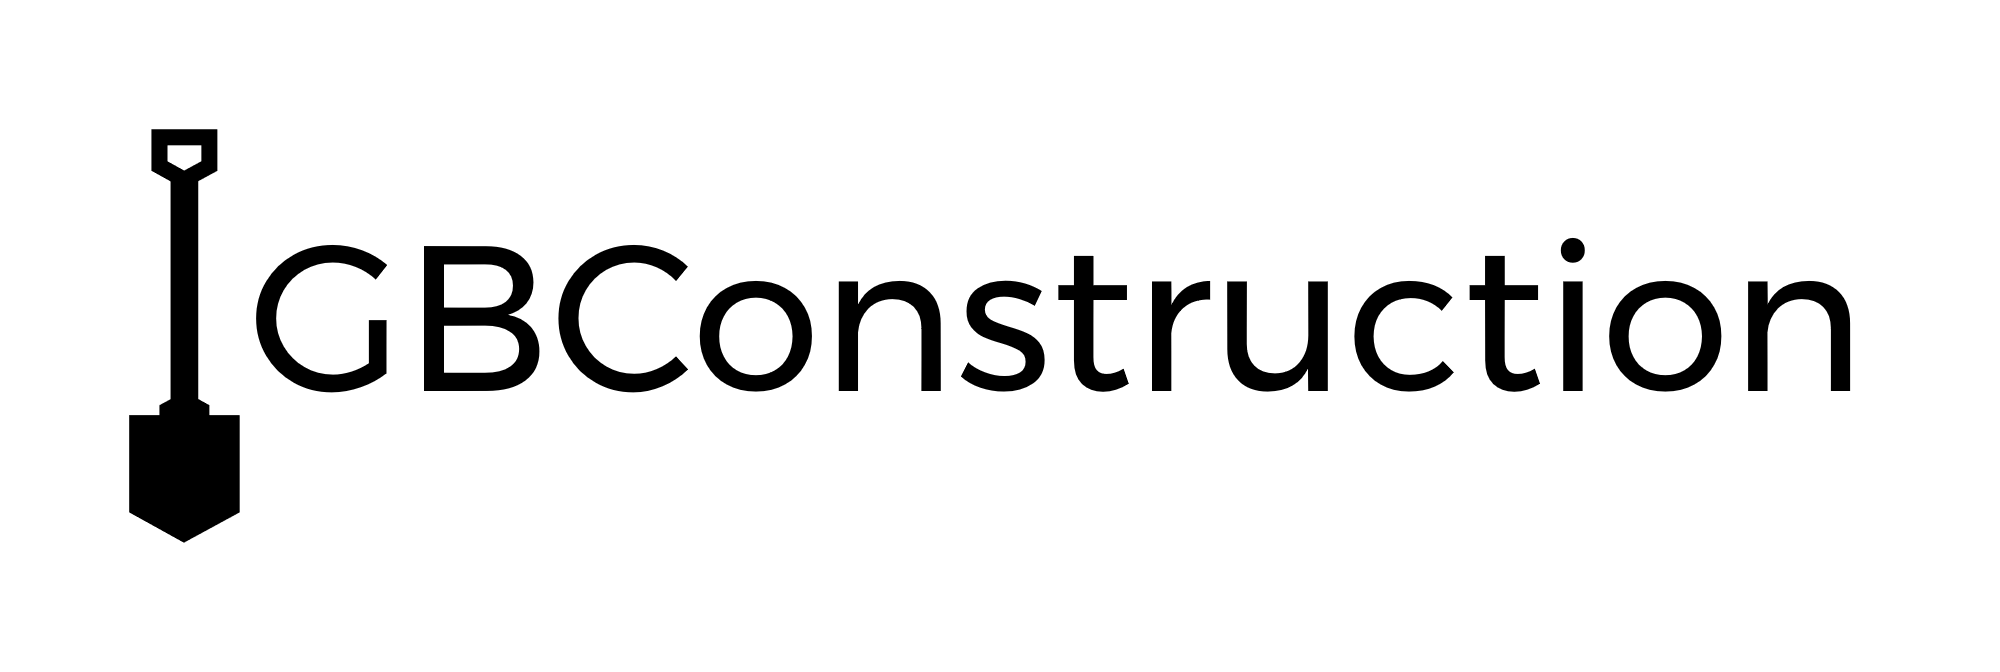 GBConstruction-logo-black.png